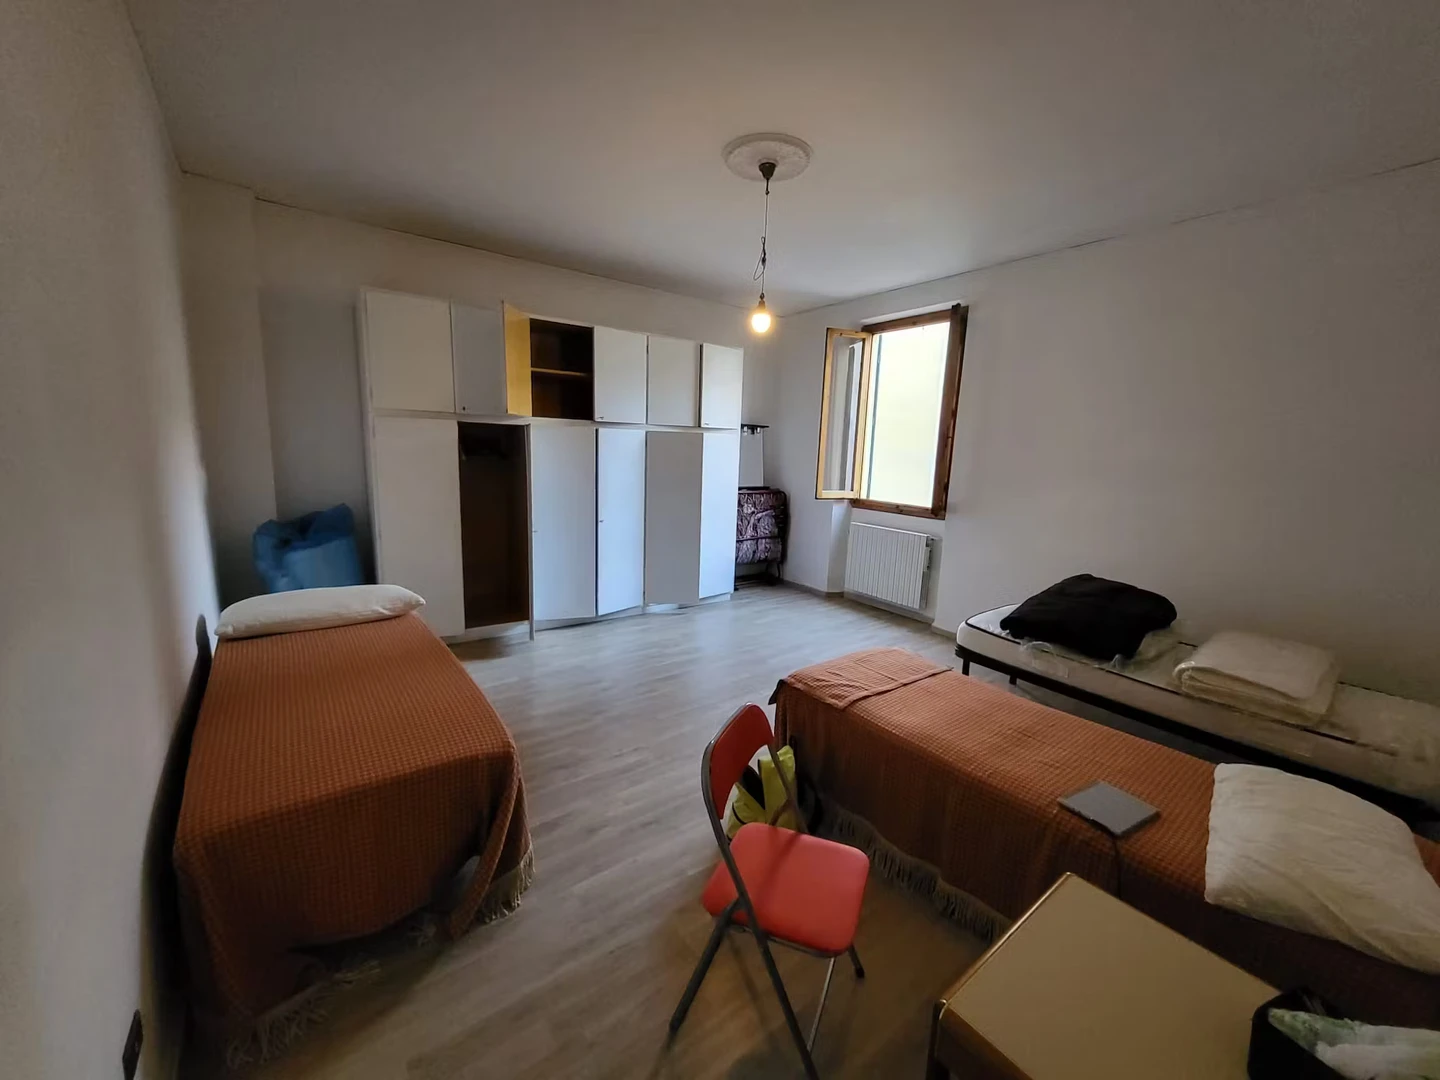 Shared room in 3-bedroom flat firenze